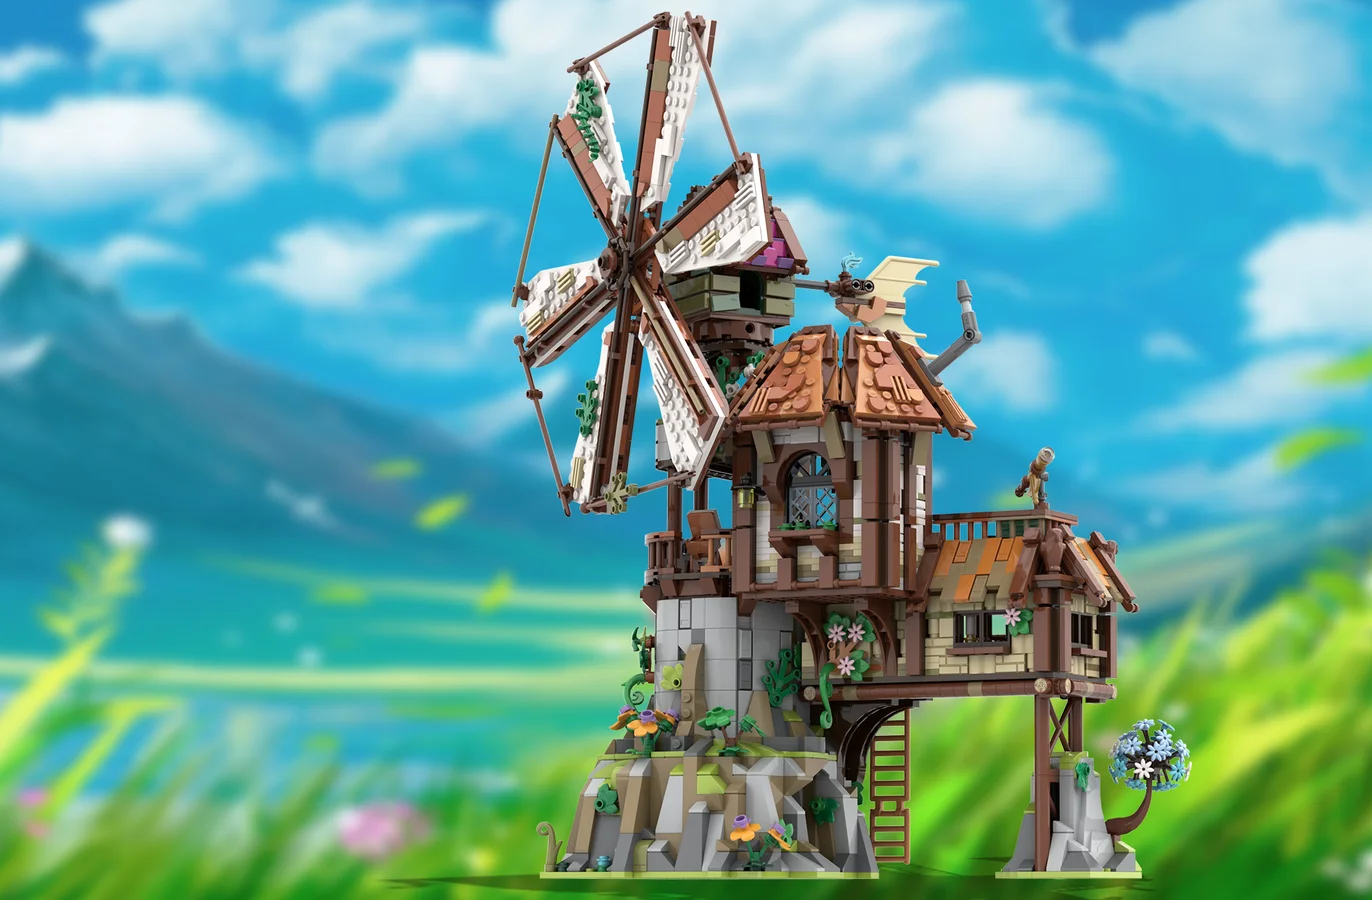 1\. The Mountain Windmill